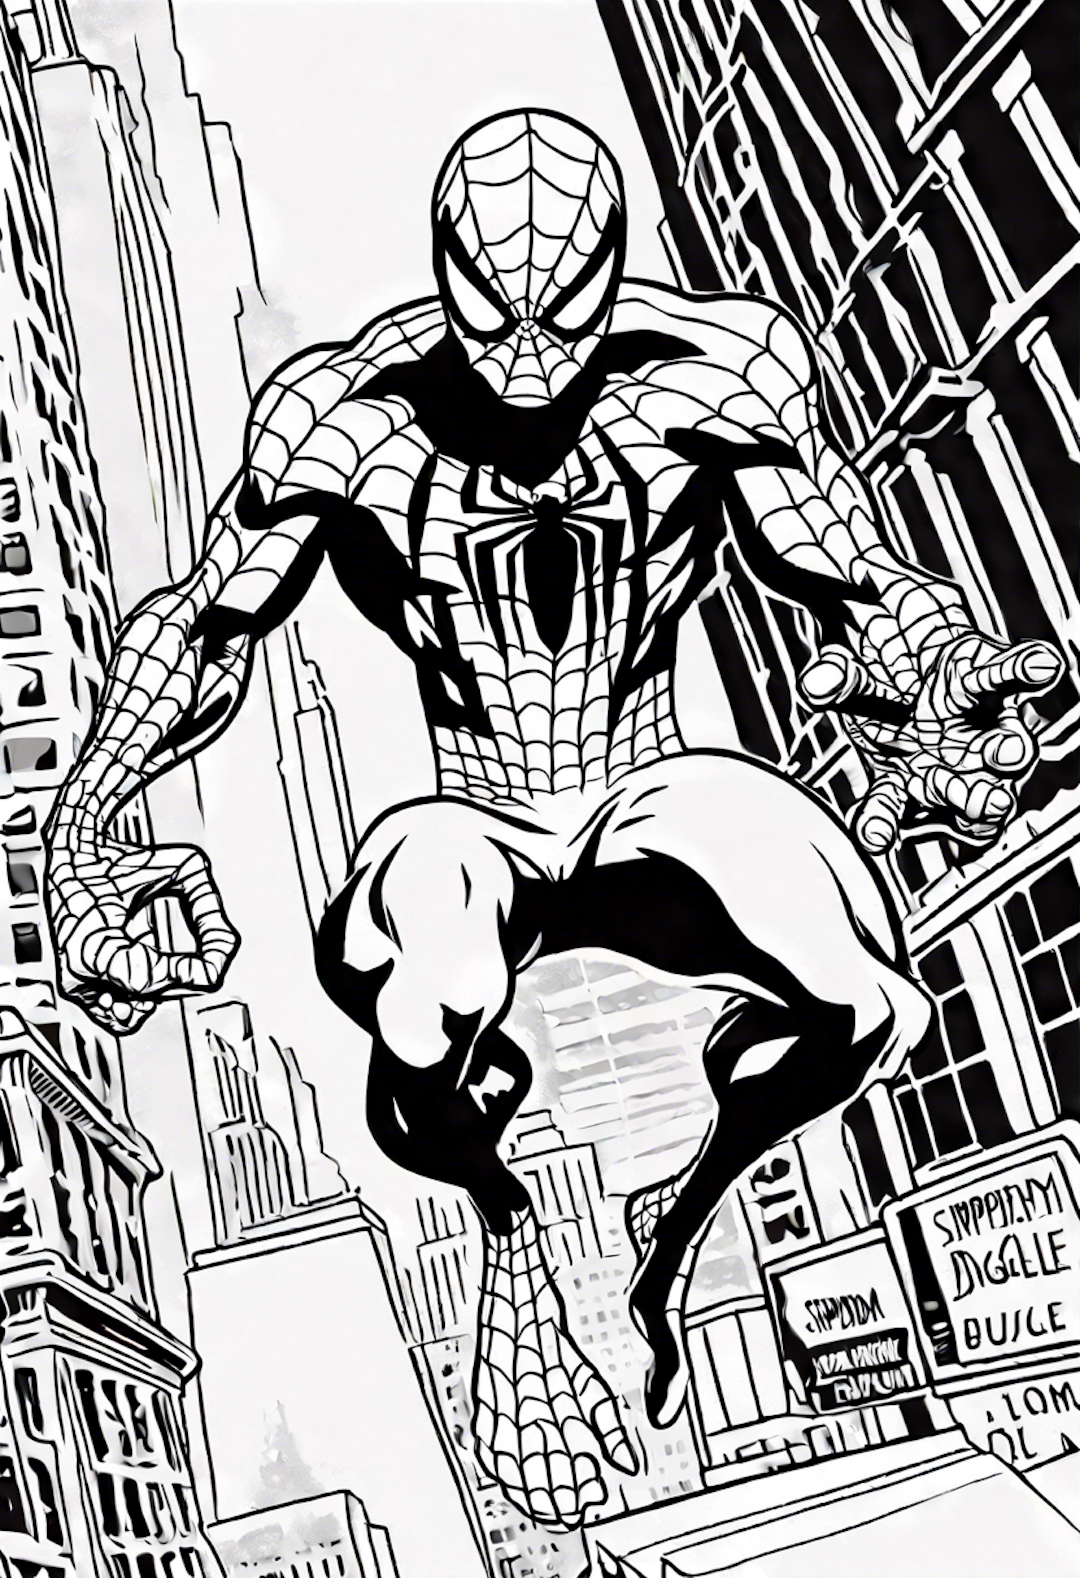 Spiderman Confronting Venom At The Daily Bugle